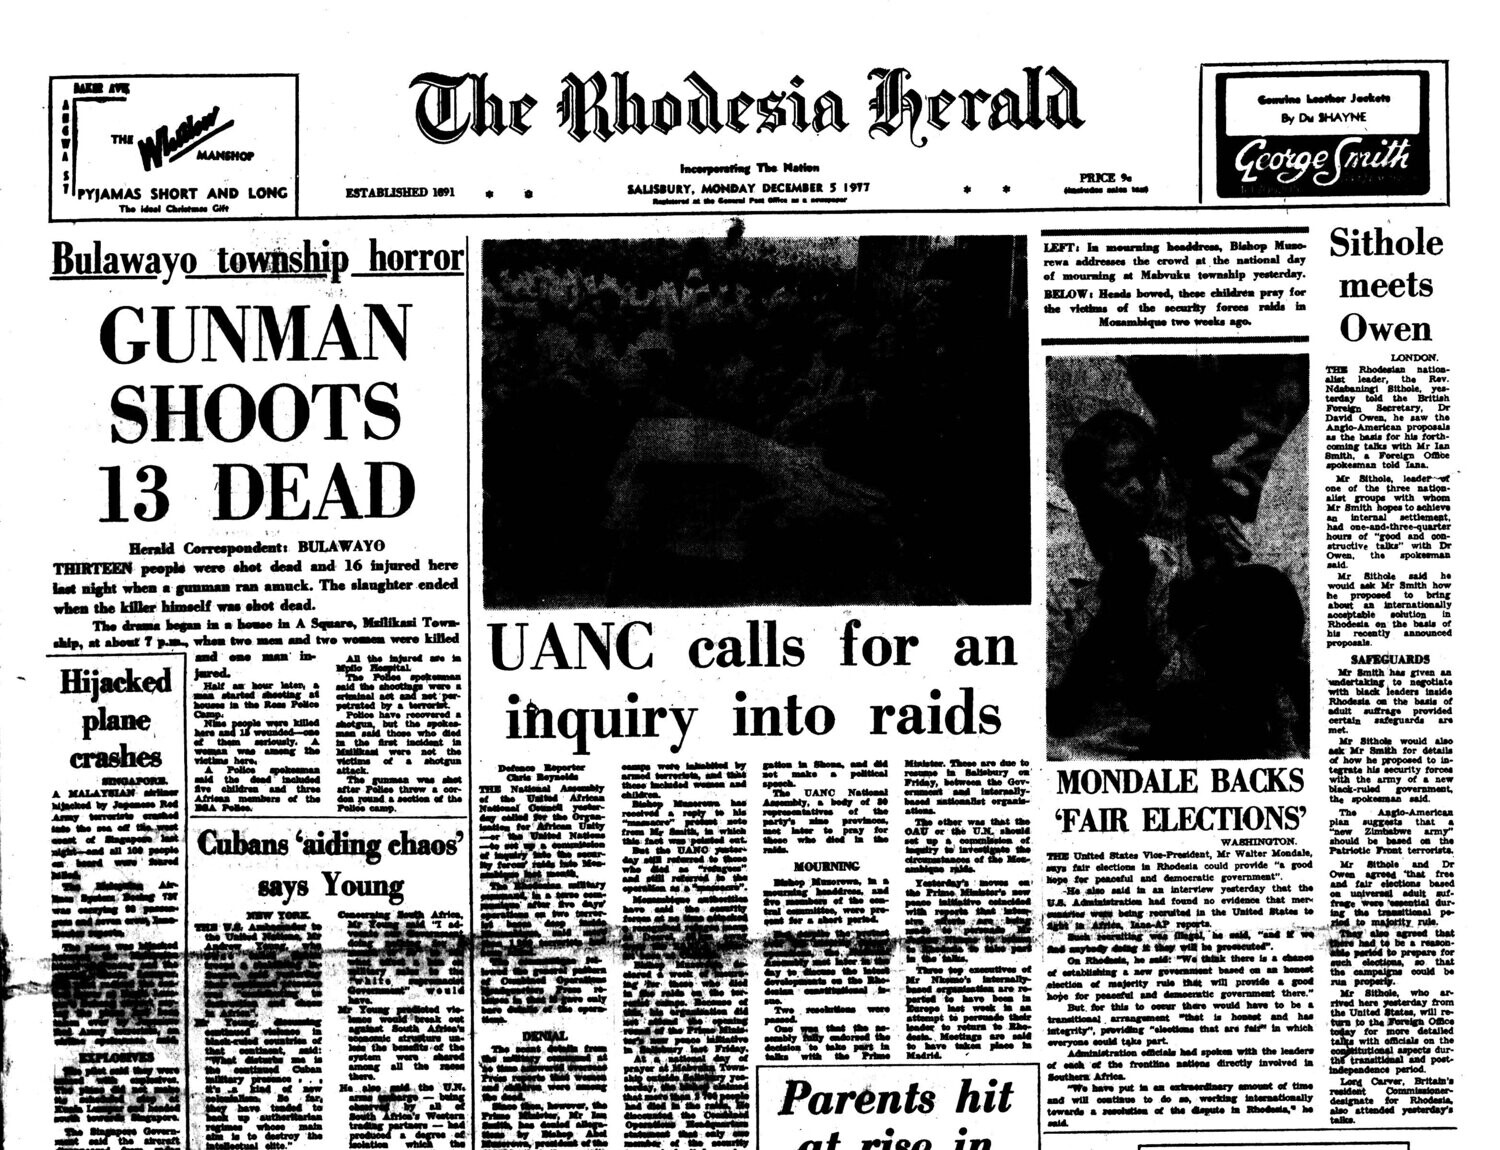 Rhodesia Herald -5 December 1977